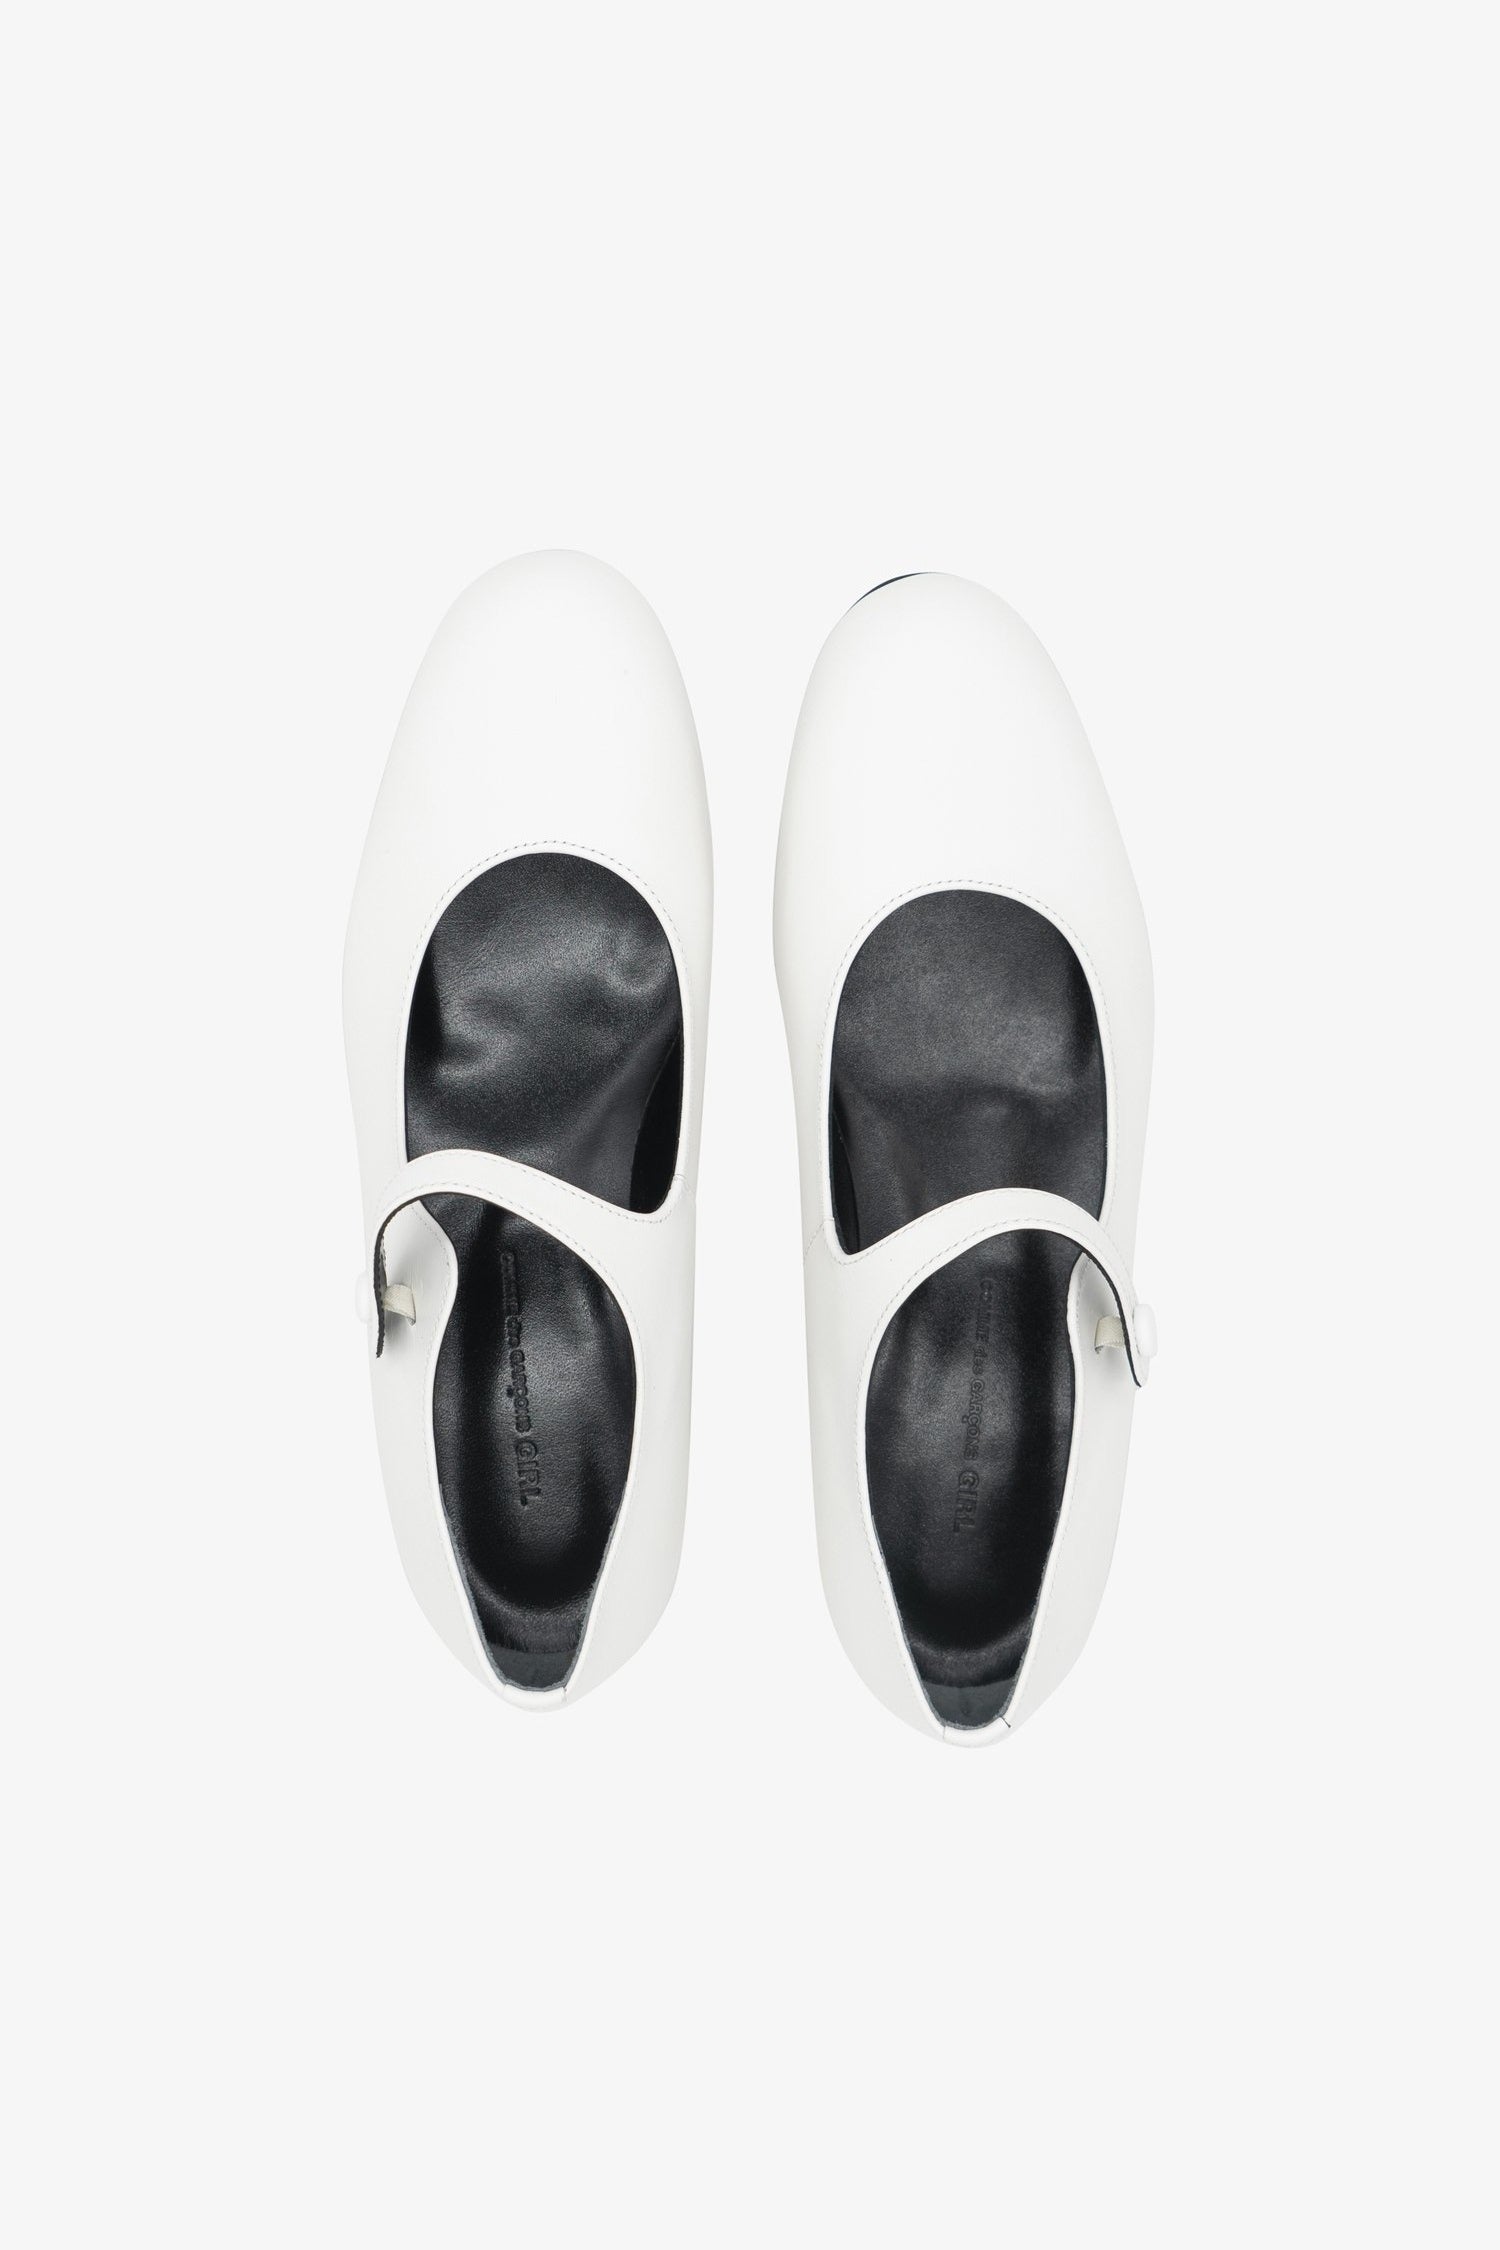 Selectshop FRAME - COMME DES GARÇONS GIRL Mary Jane Flats Footwear Dubai